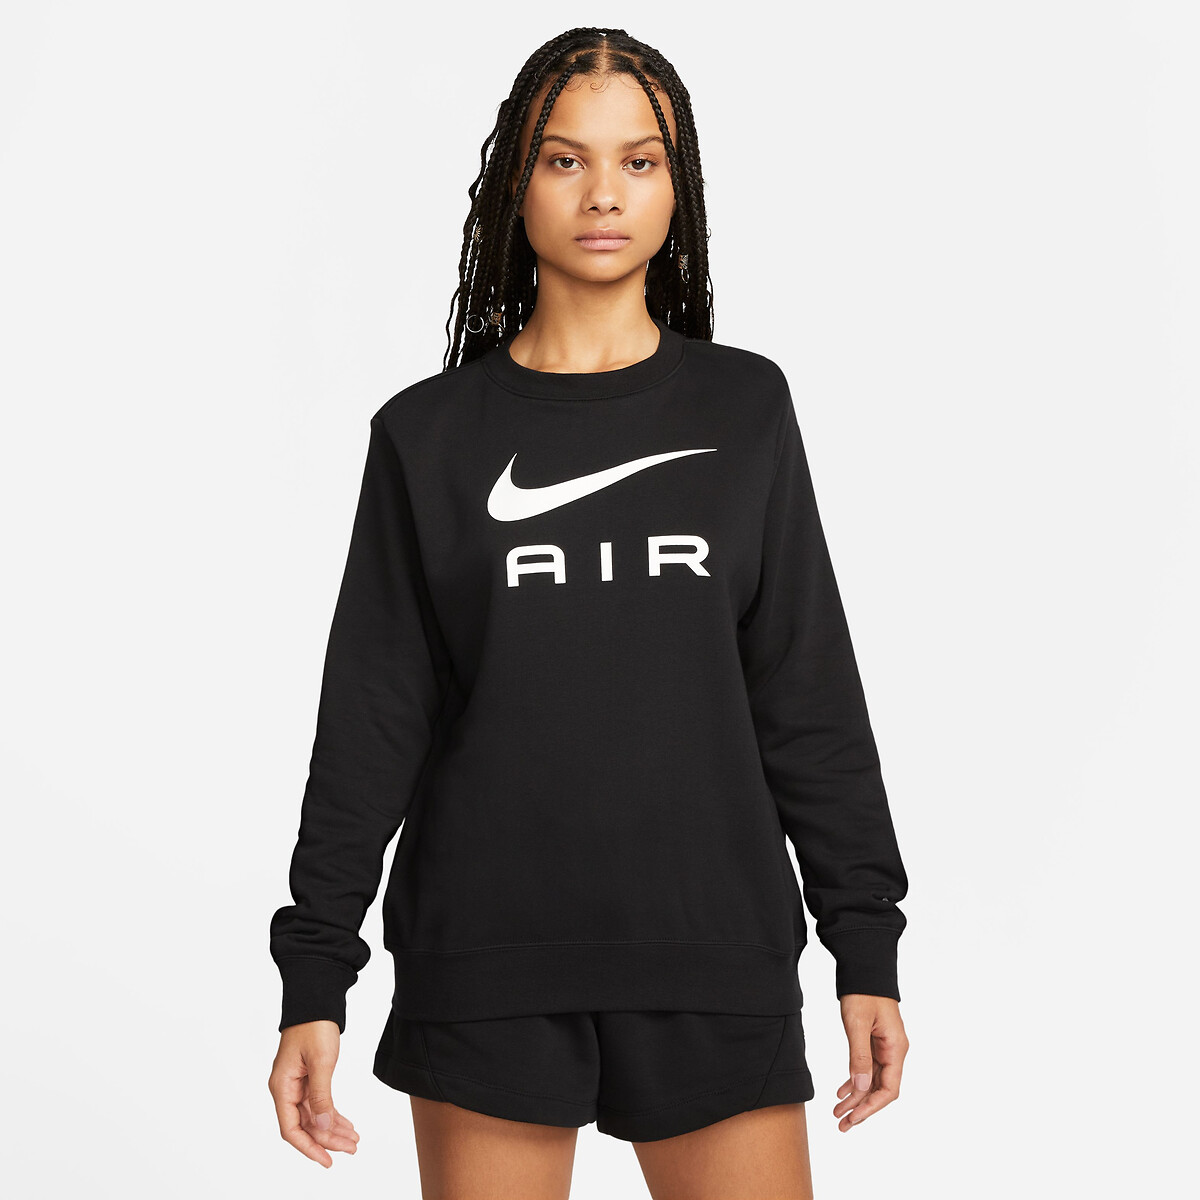 Air Club Fleece Sweatshirt in Cotton Mix